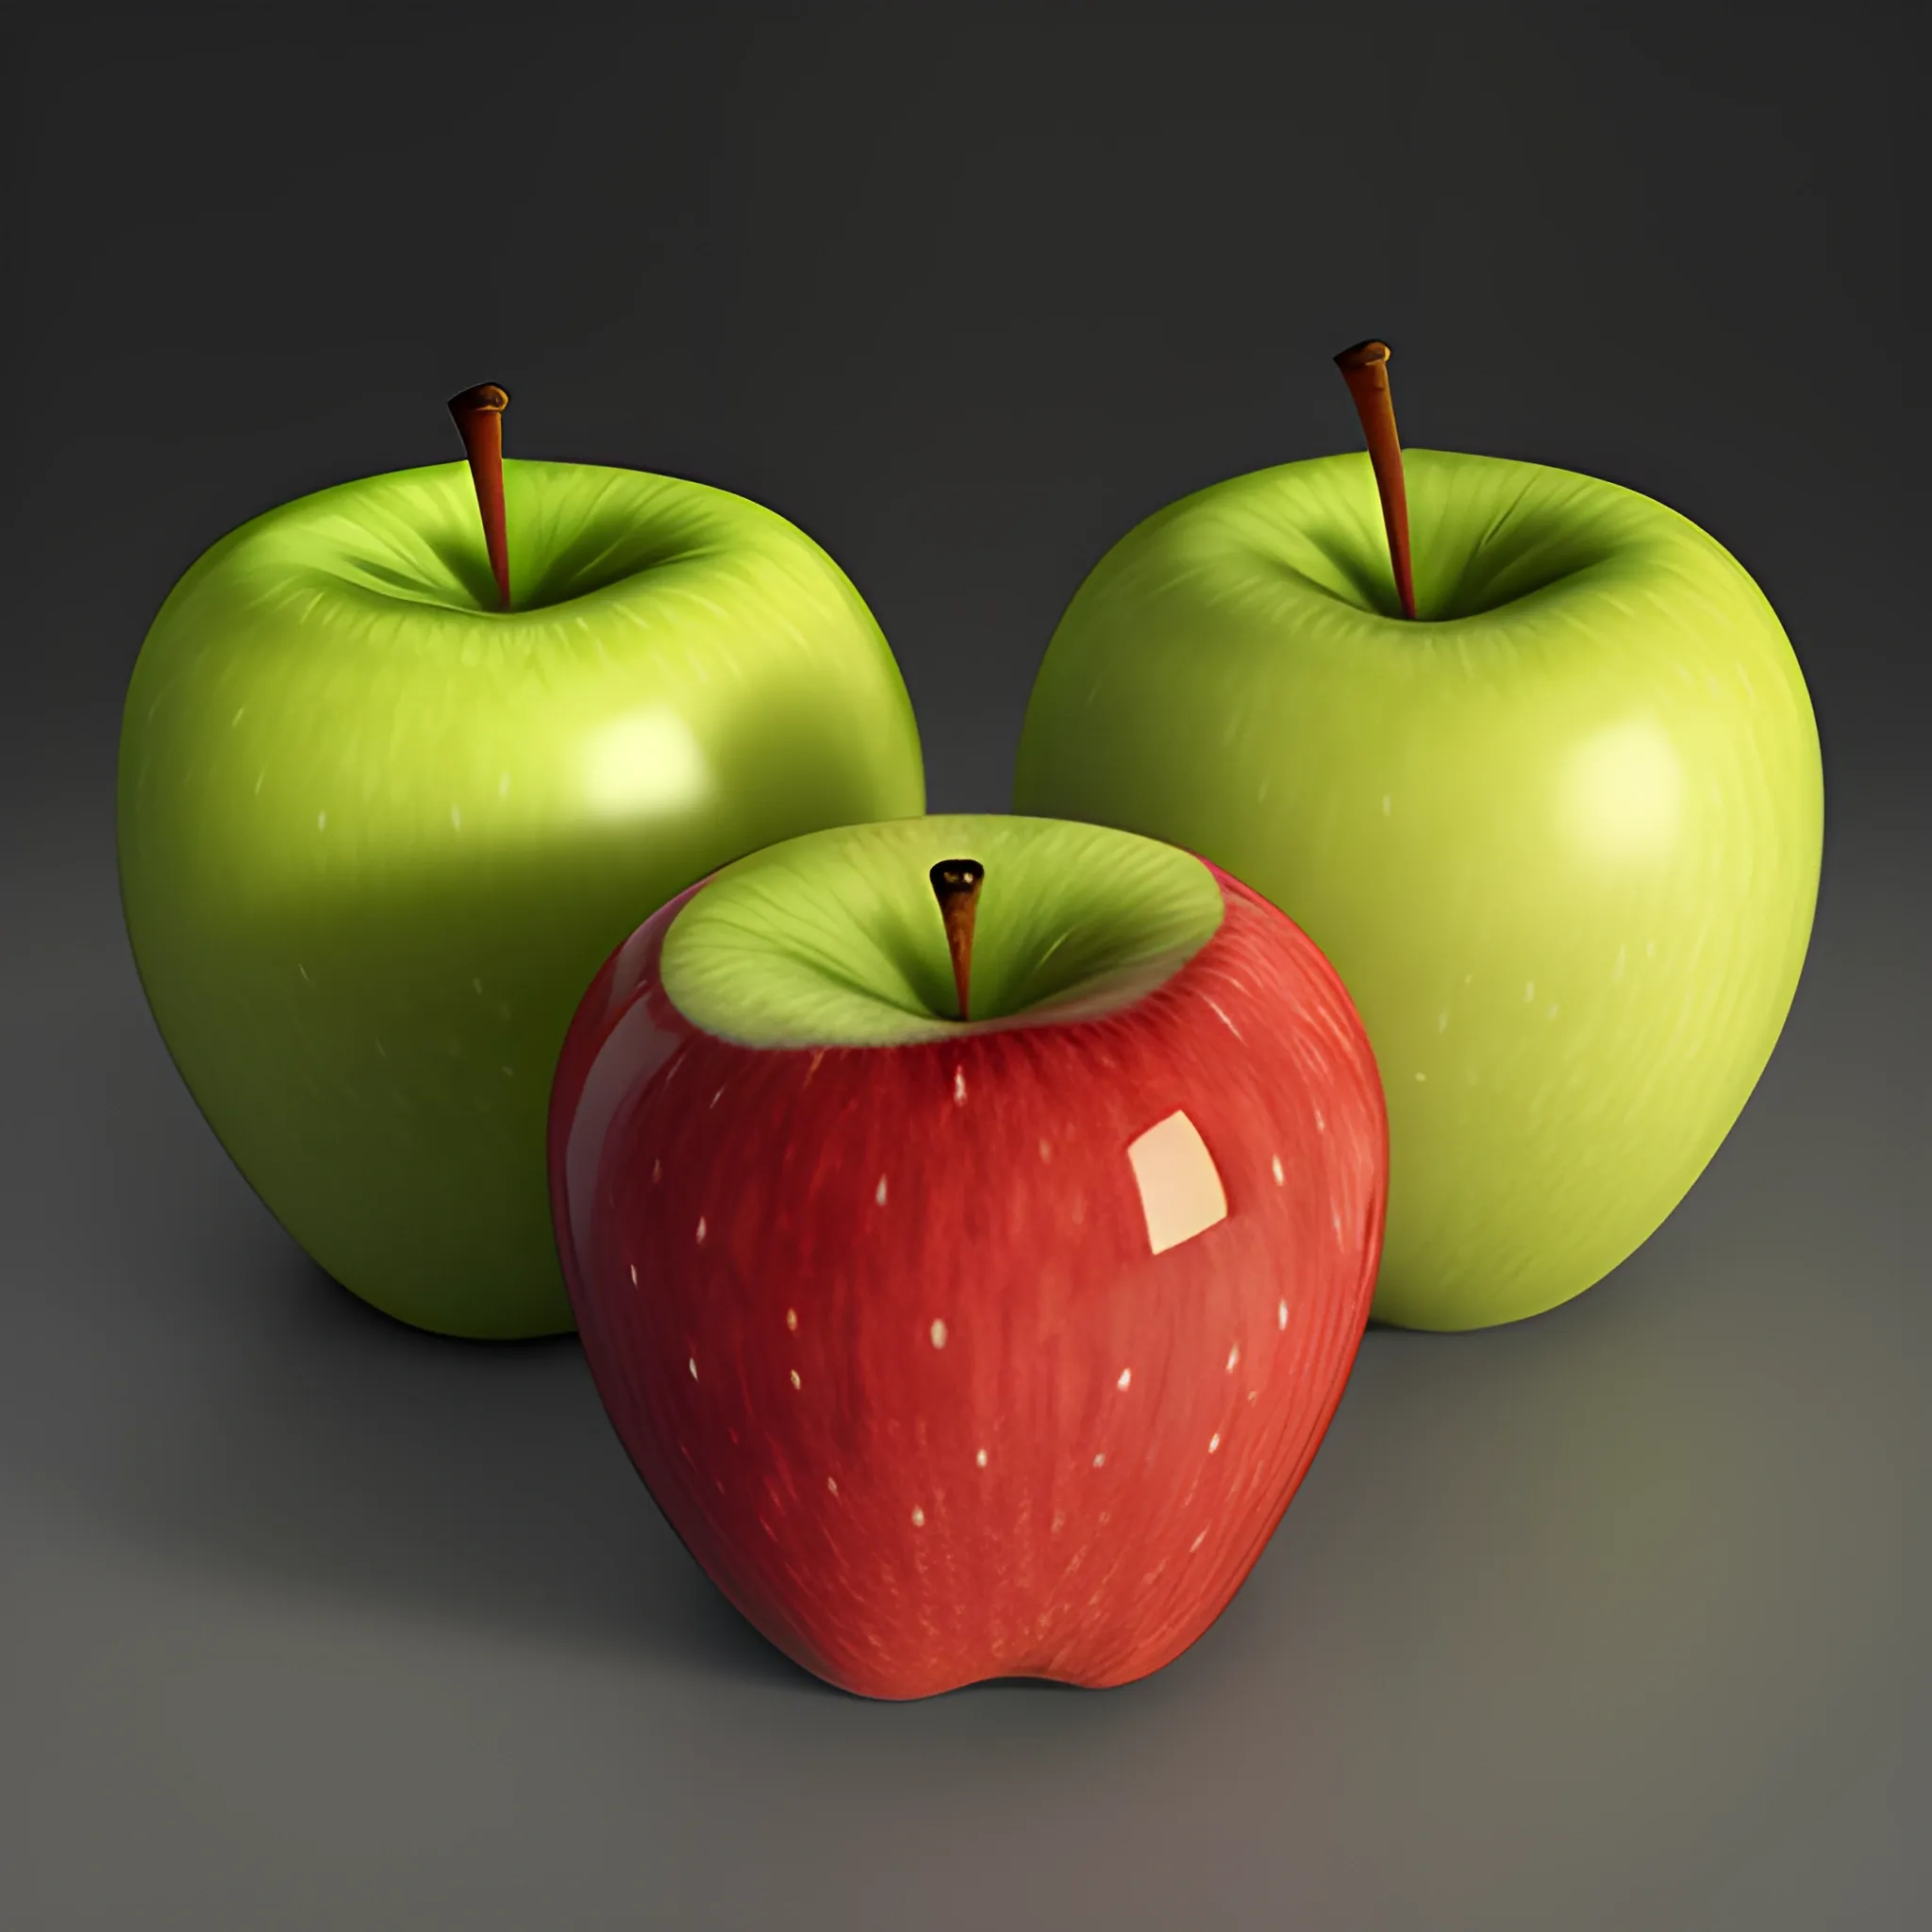 photorealistic apples